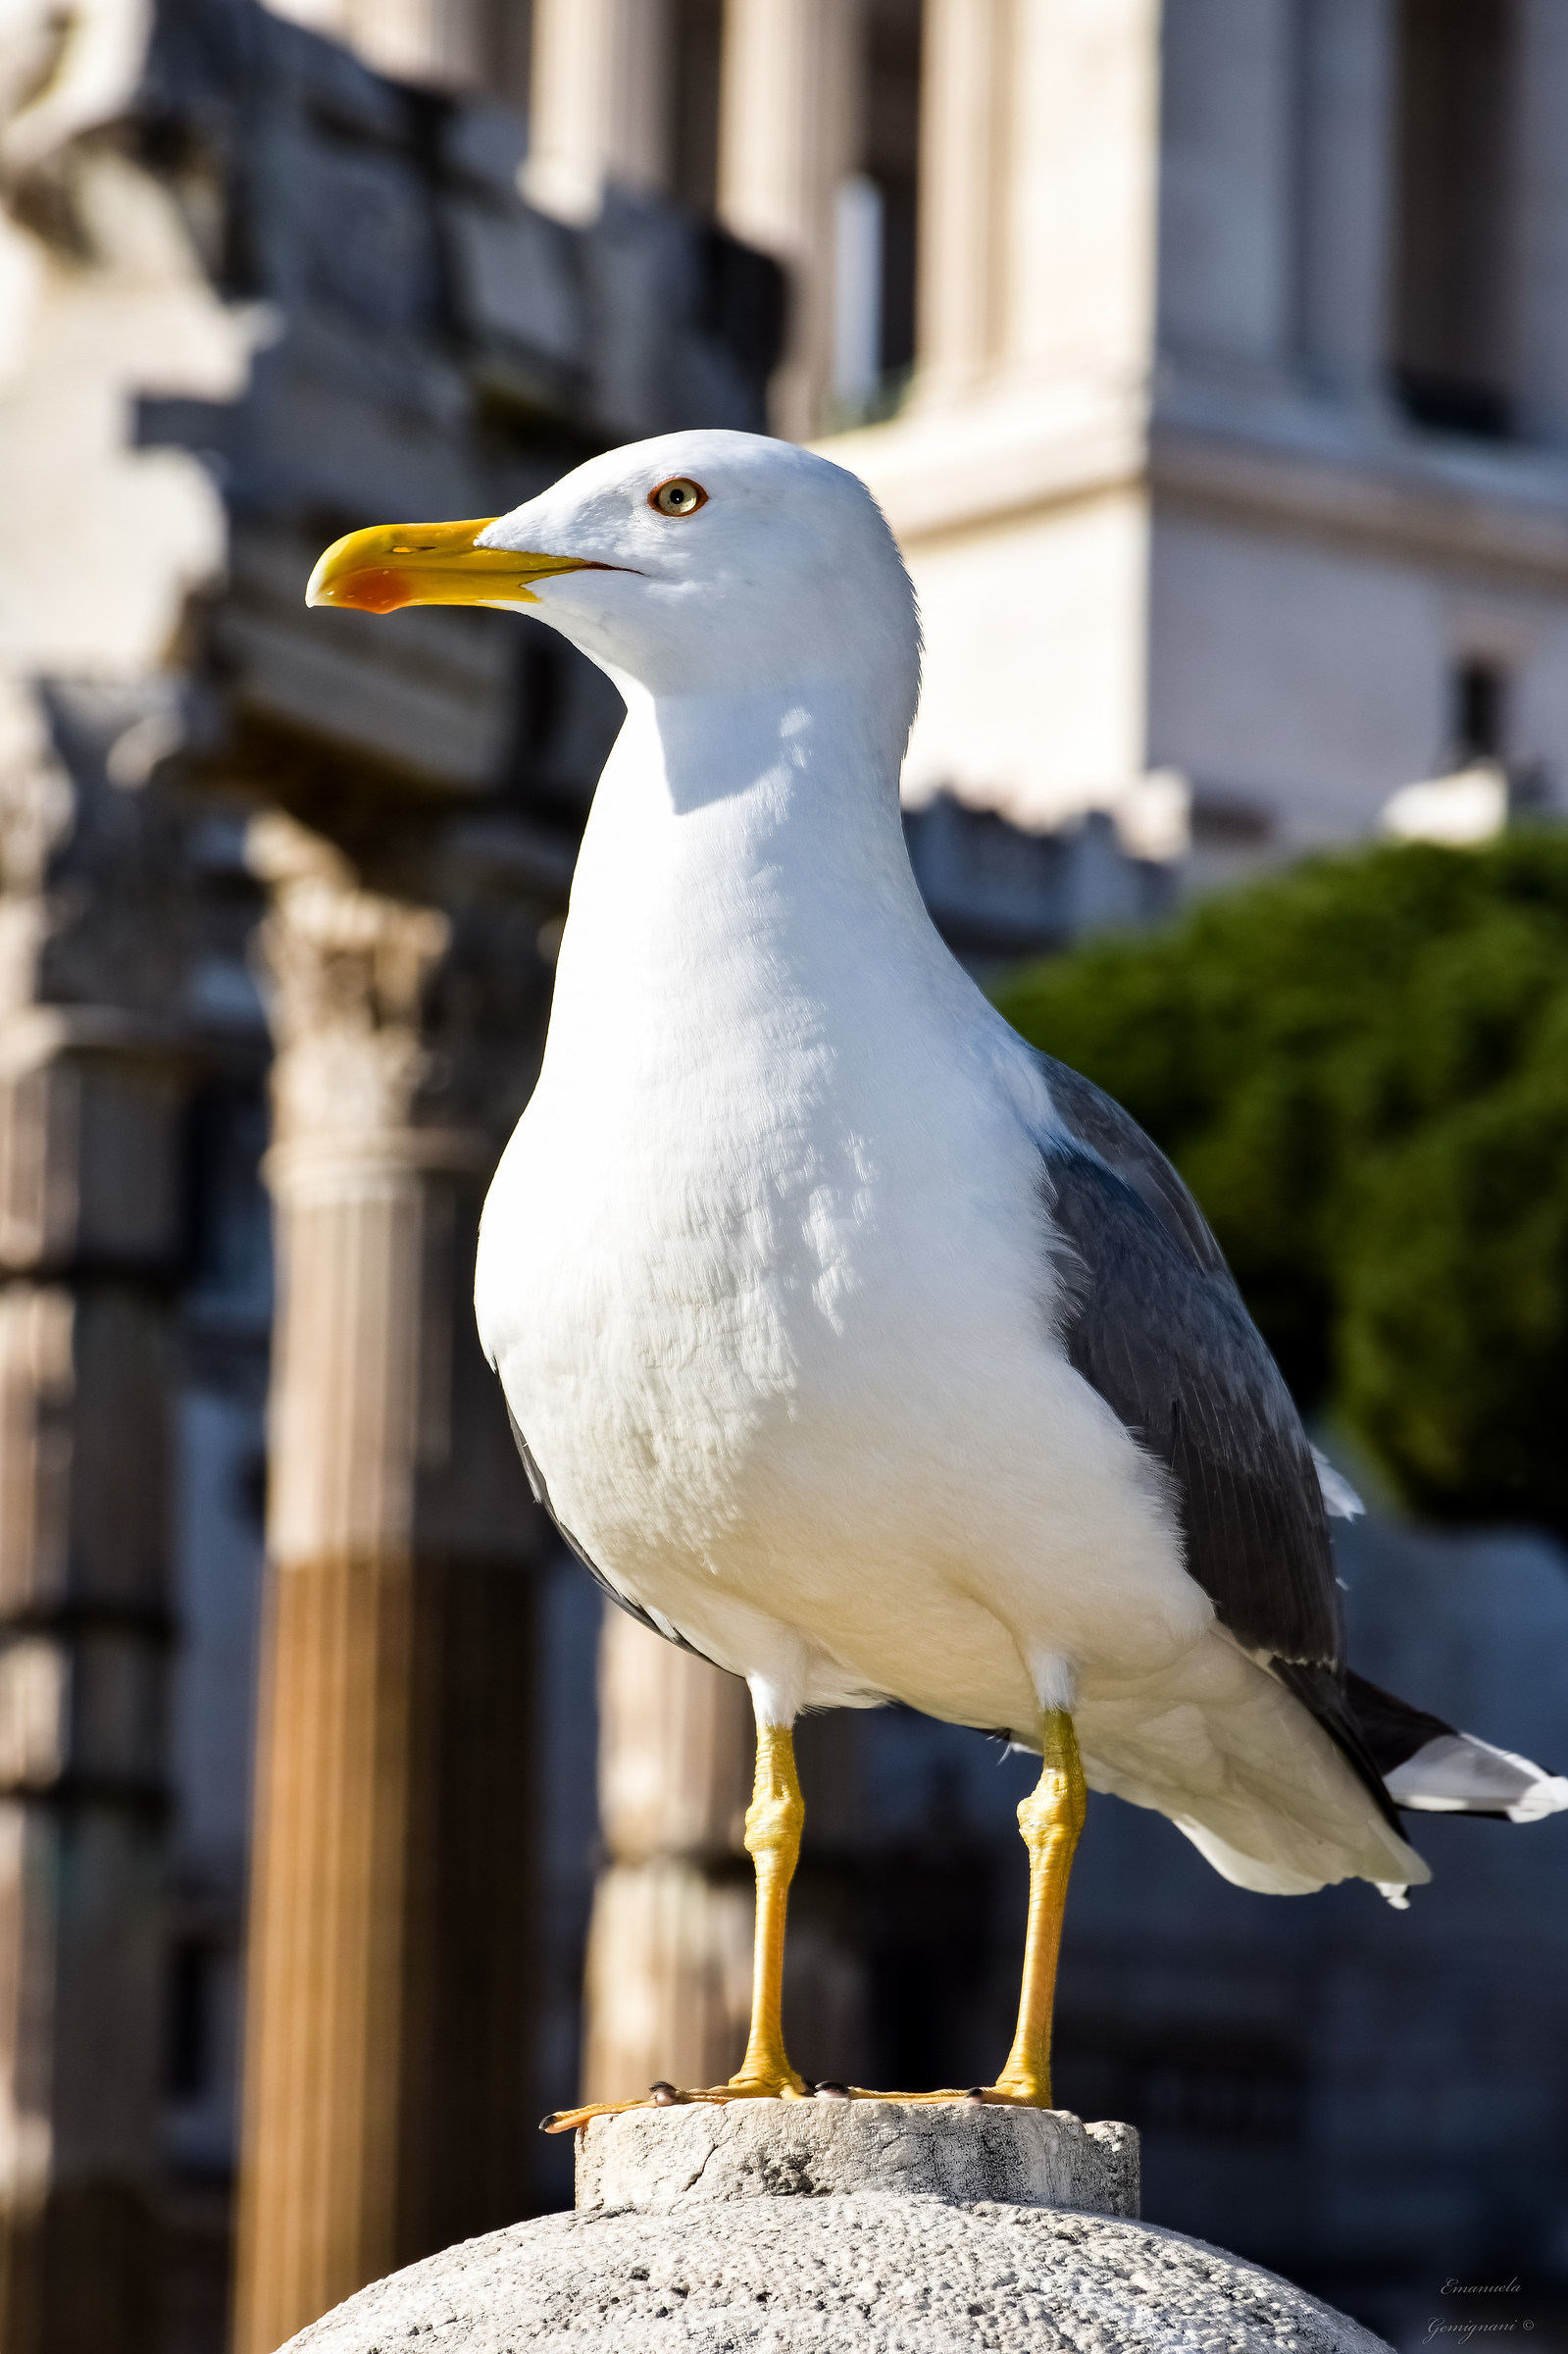 The Roman seagull...